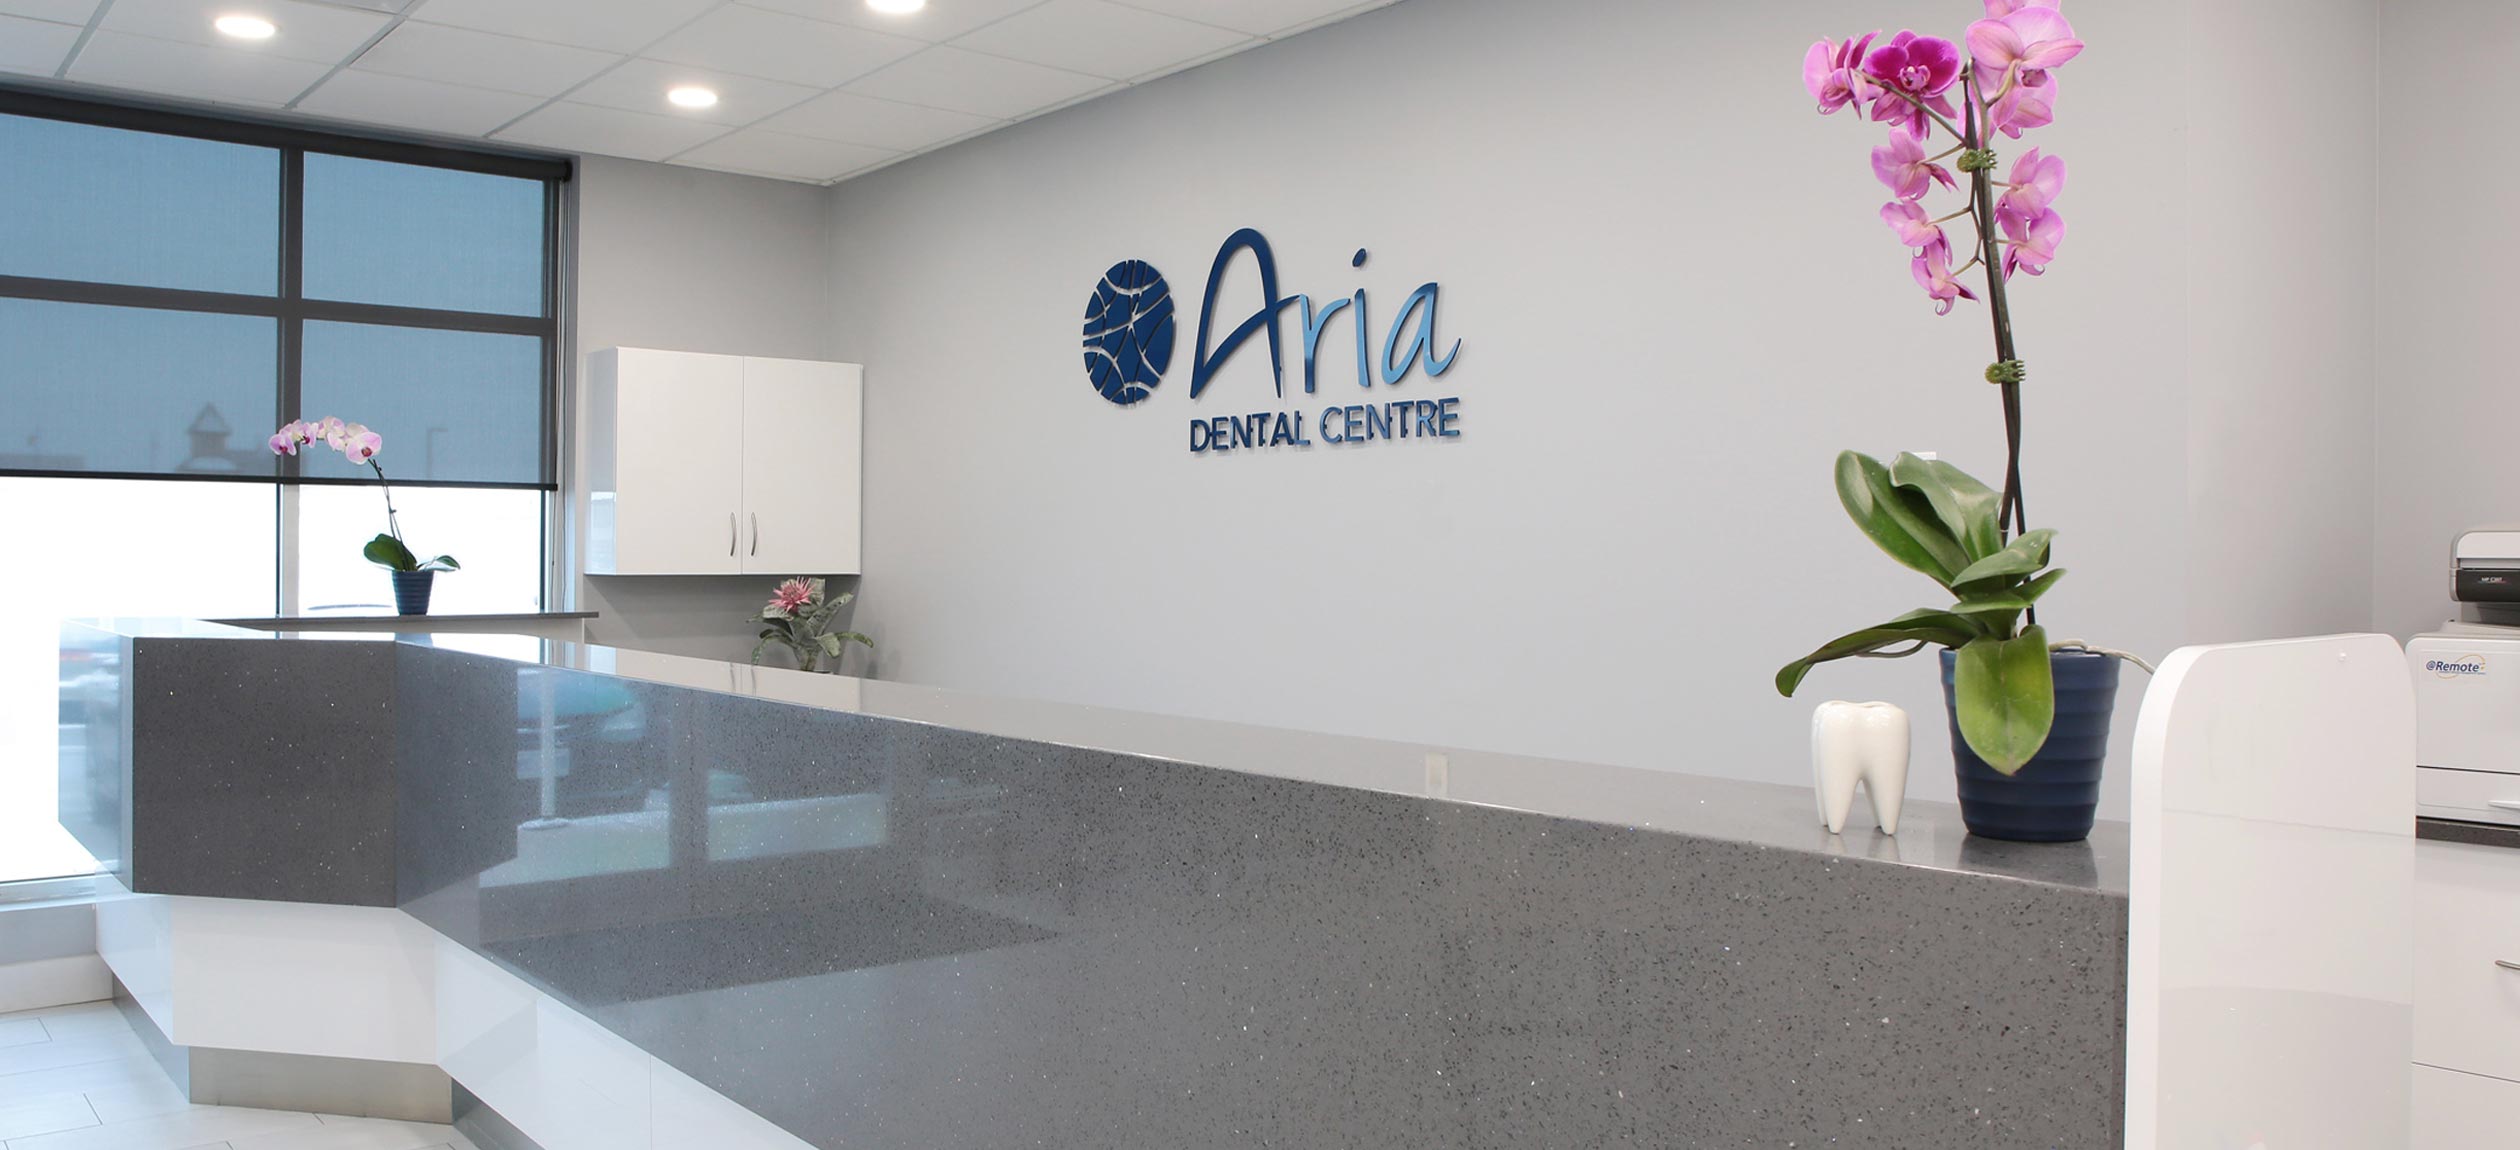 Aria Dental reception